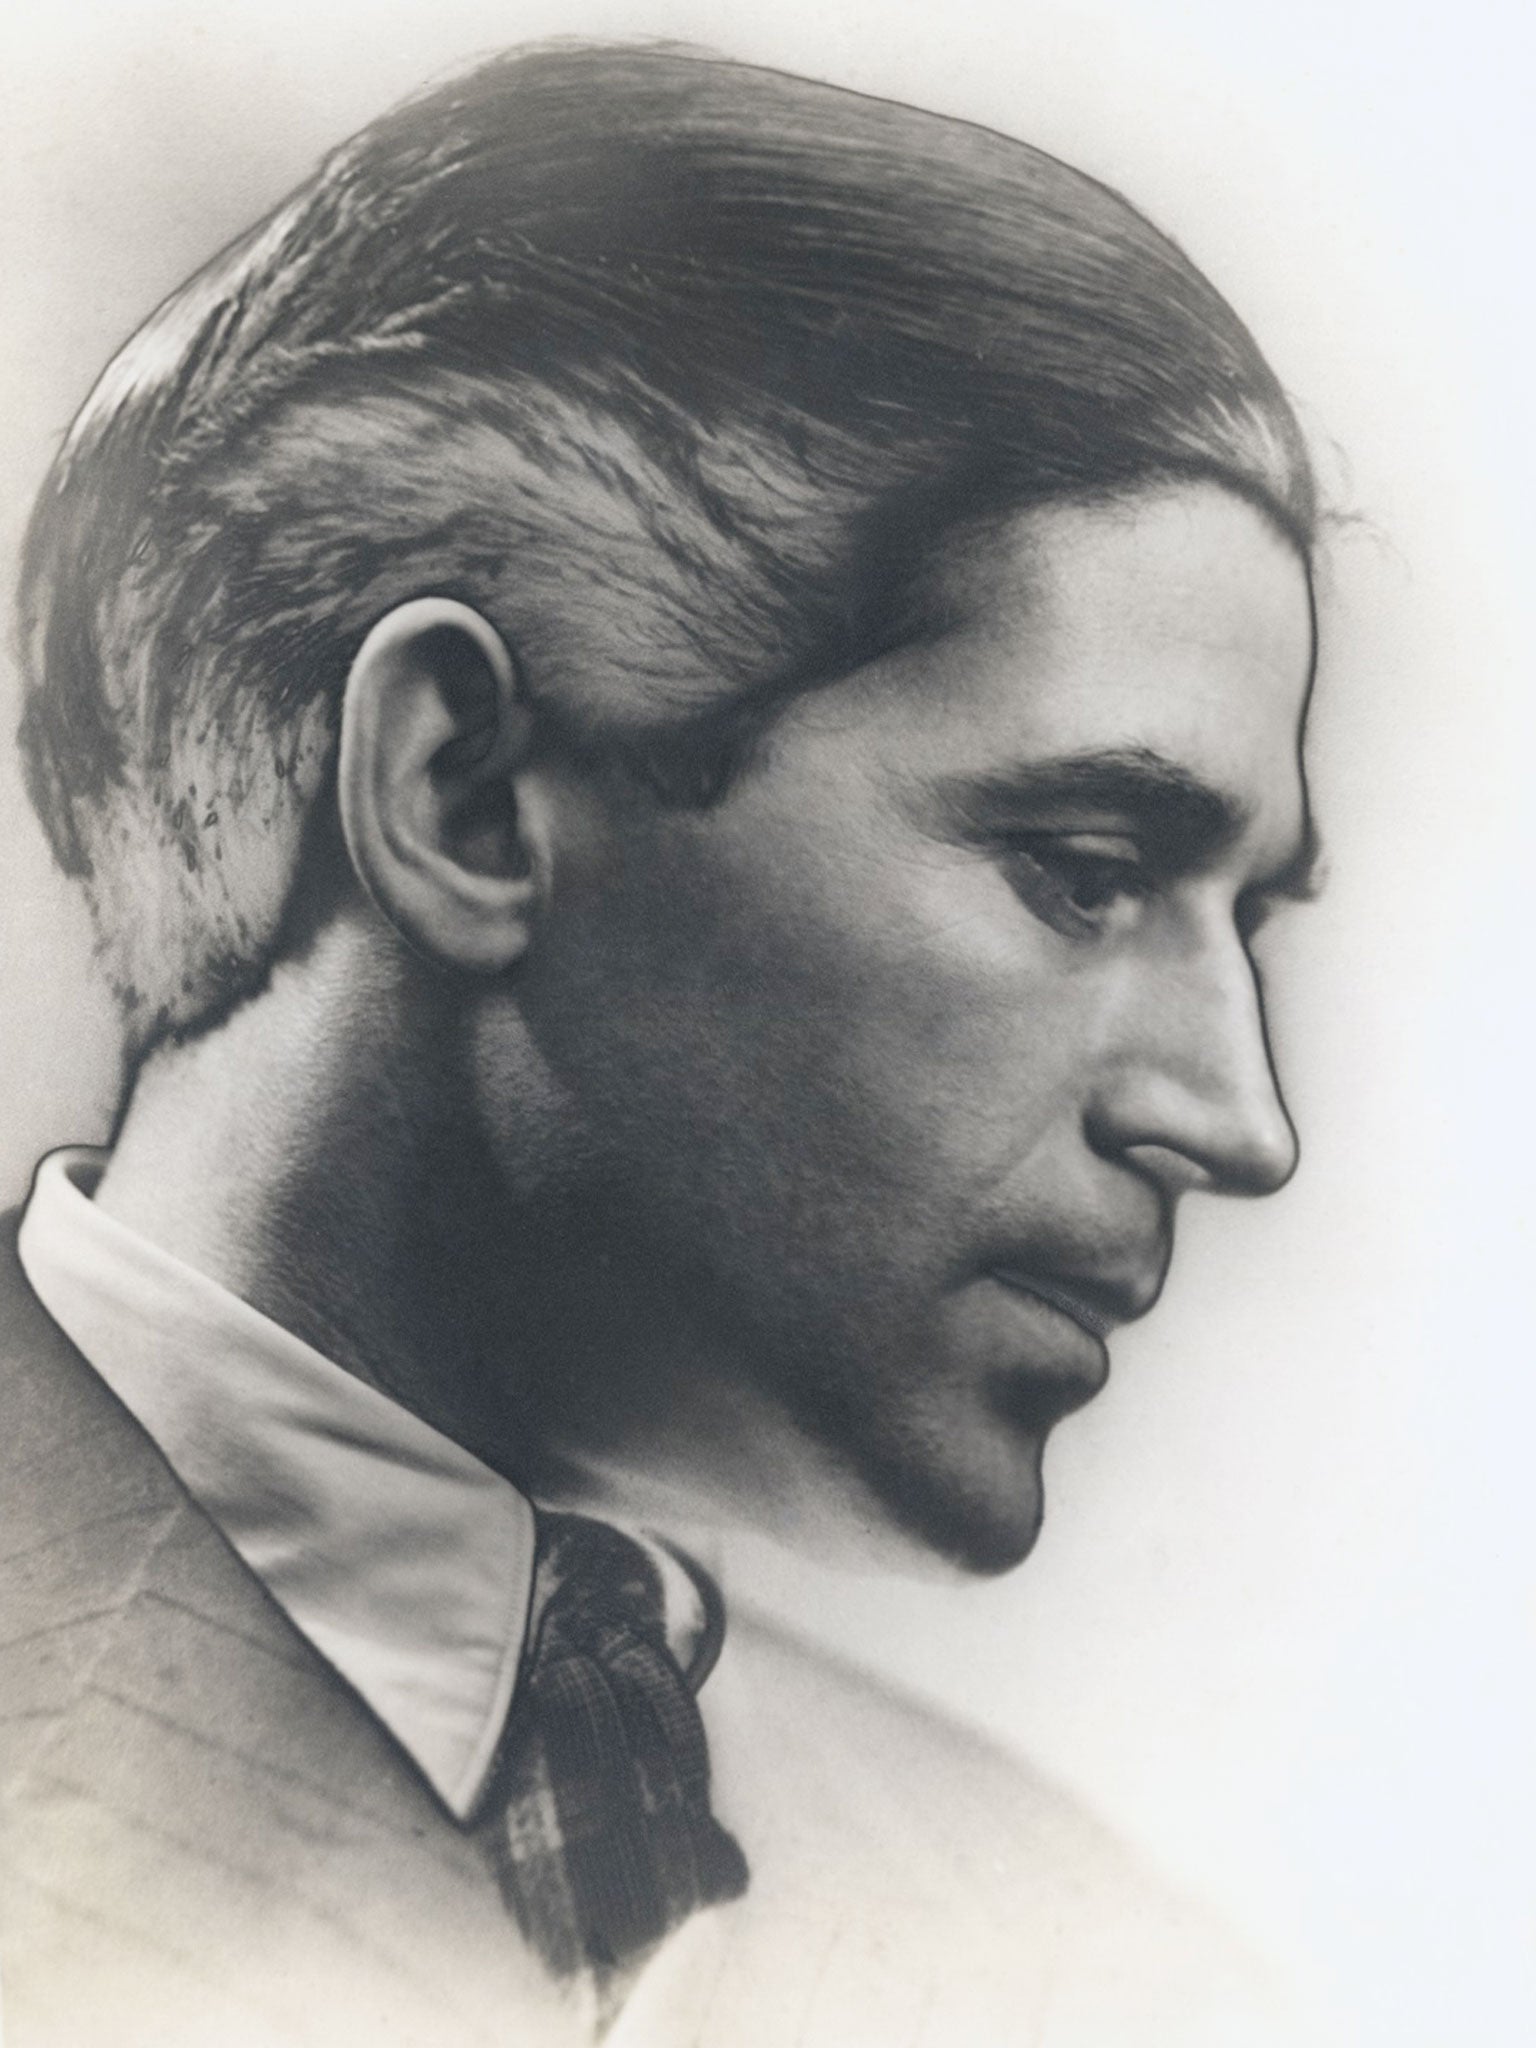 ‘Singer David Brynley’, solarised portrait, c.1933